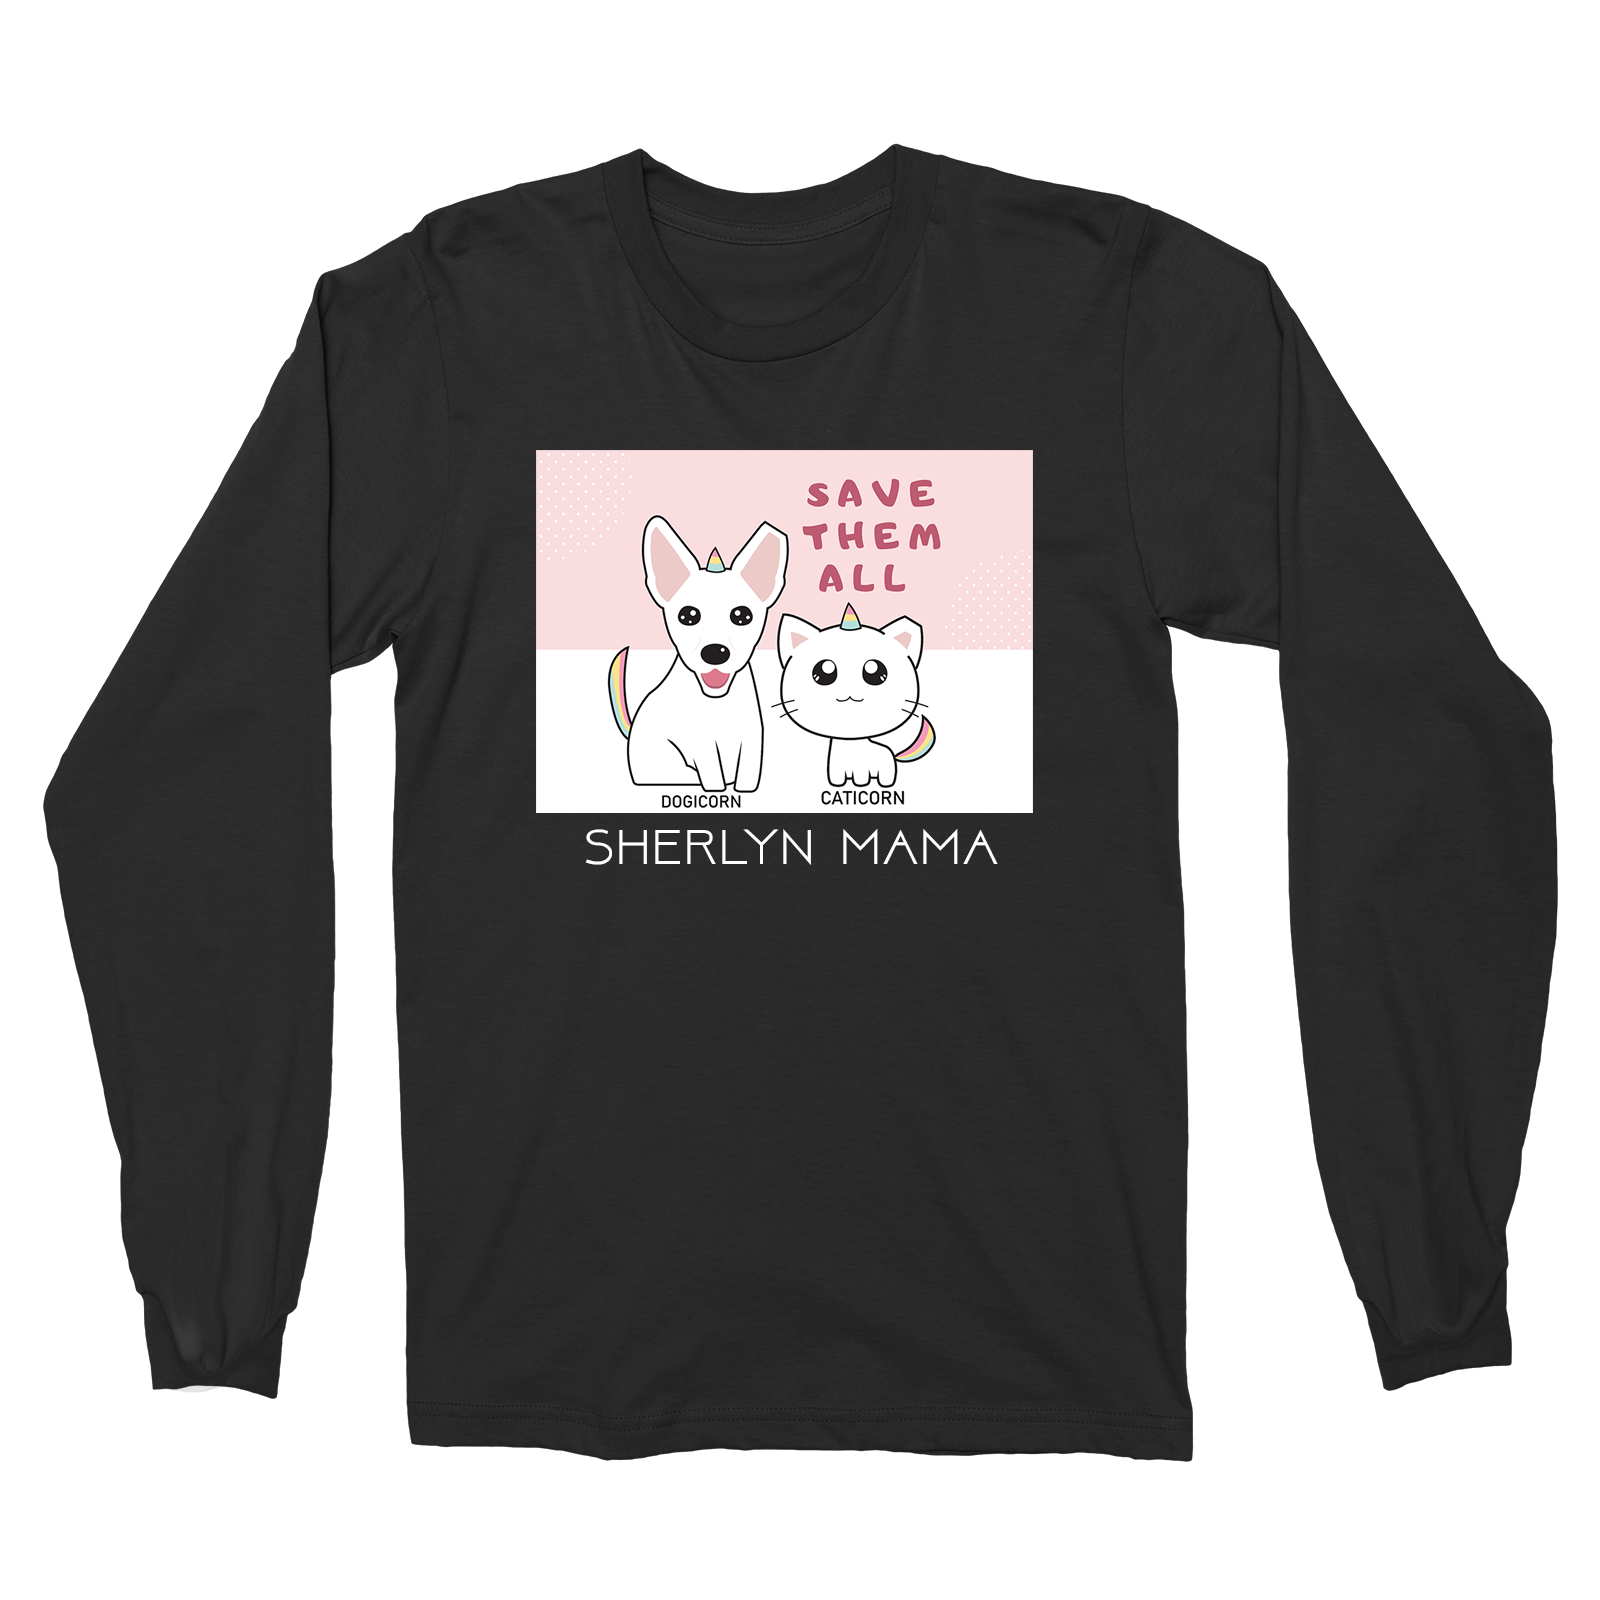 Sherlyn Mama Cute Mix Dogicorn and Caticorn Accessories Long Sleeve Unisex T-Shirt